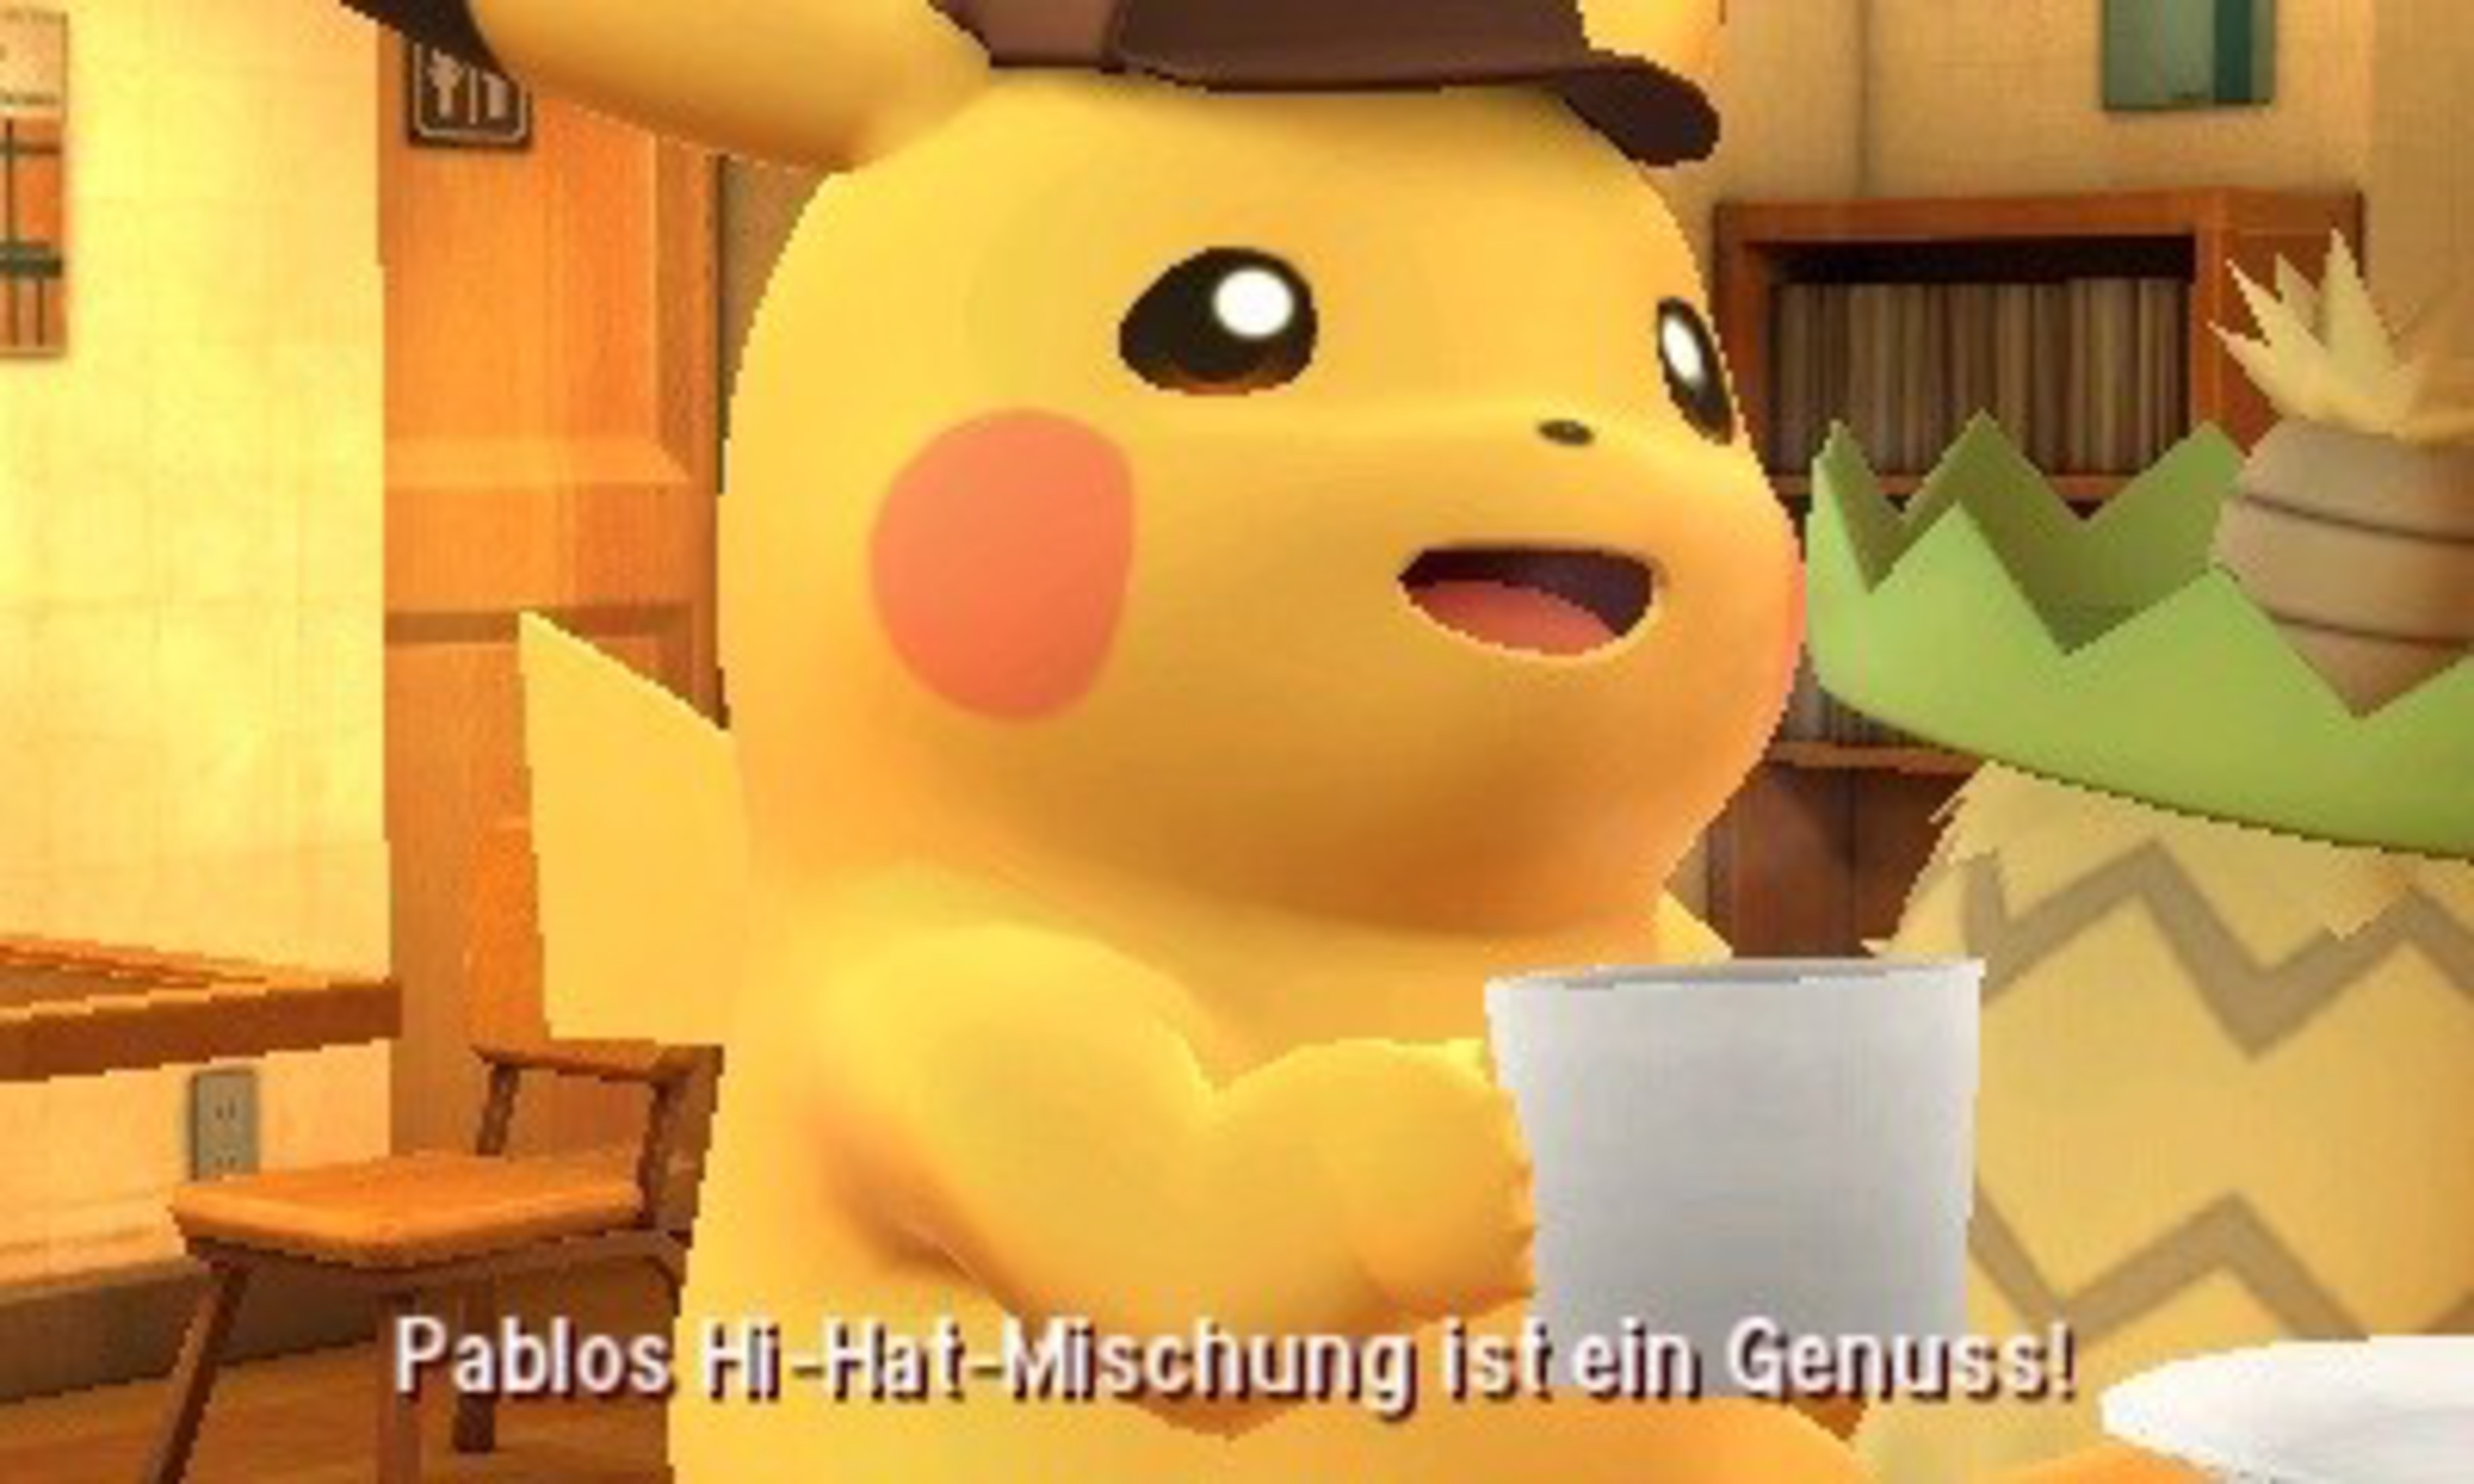 [Nintendo Meisterdetektiv - Pikachu 3DS]